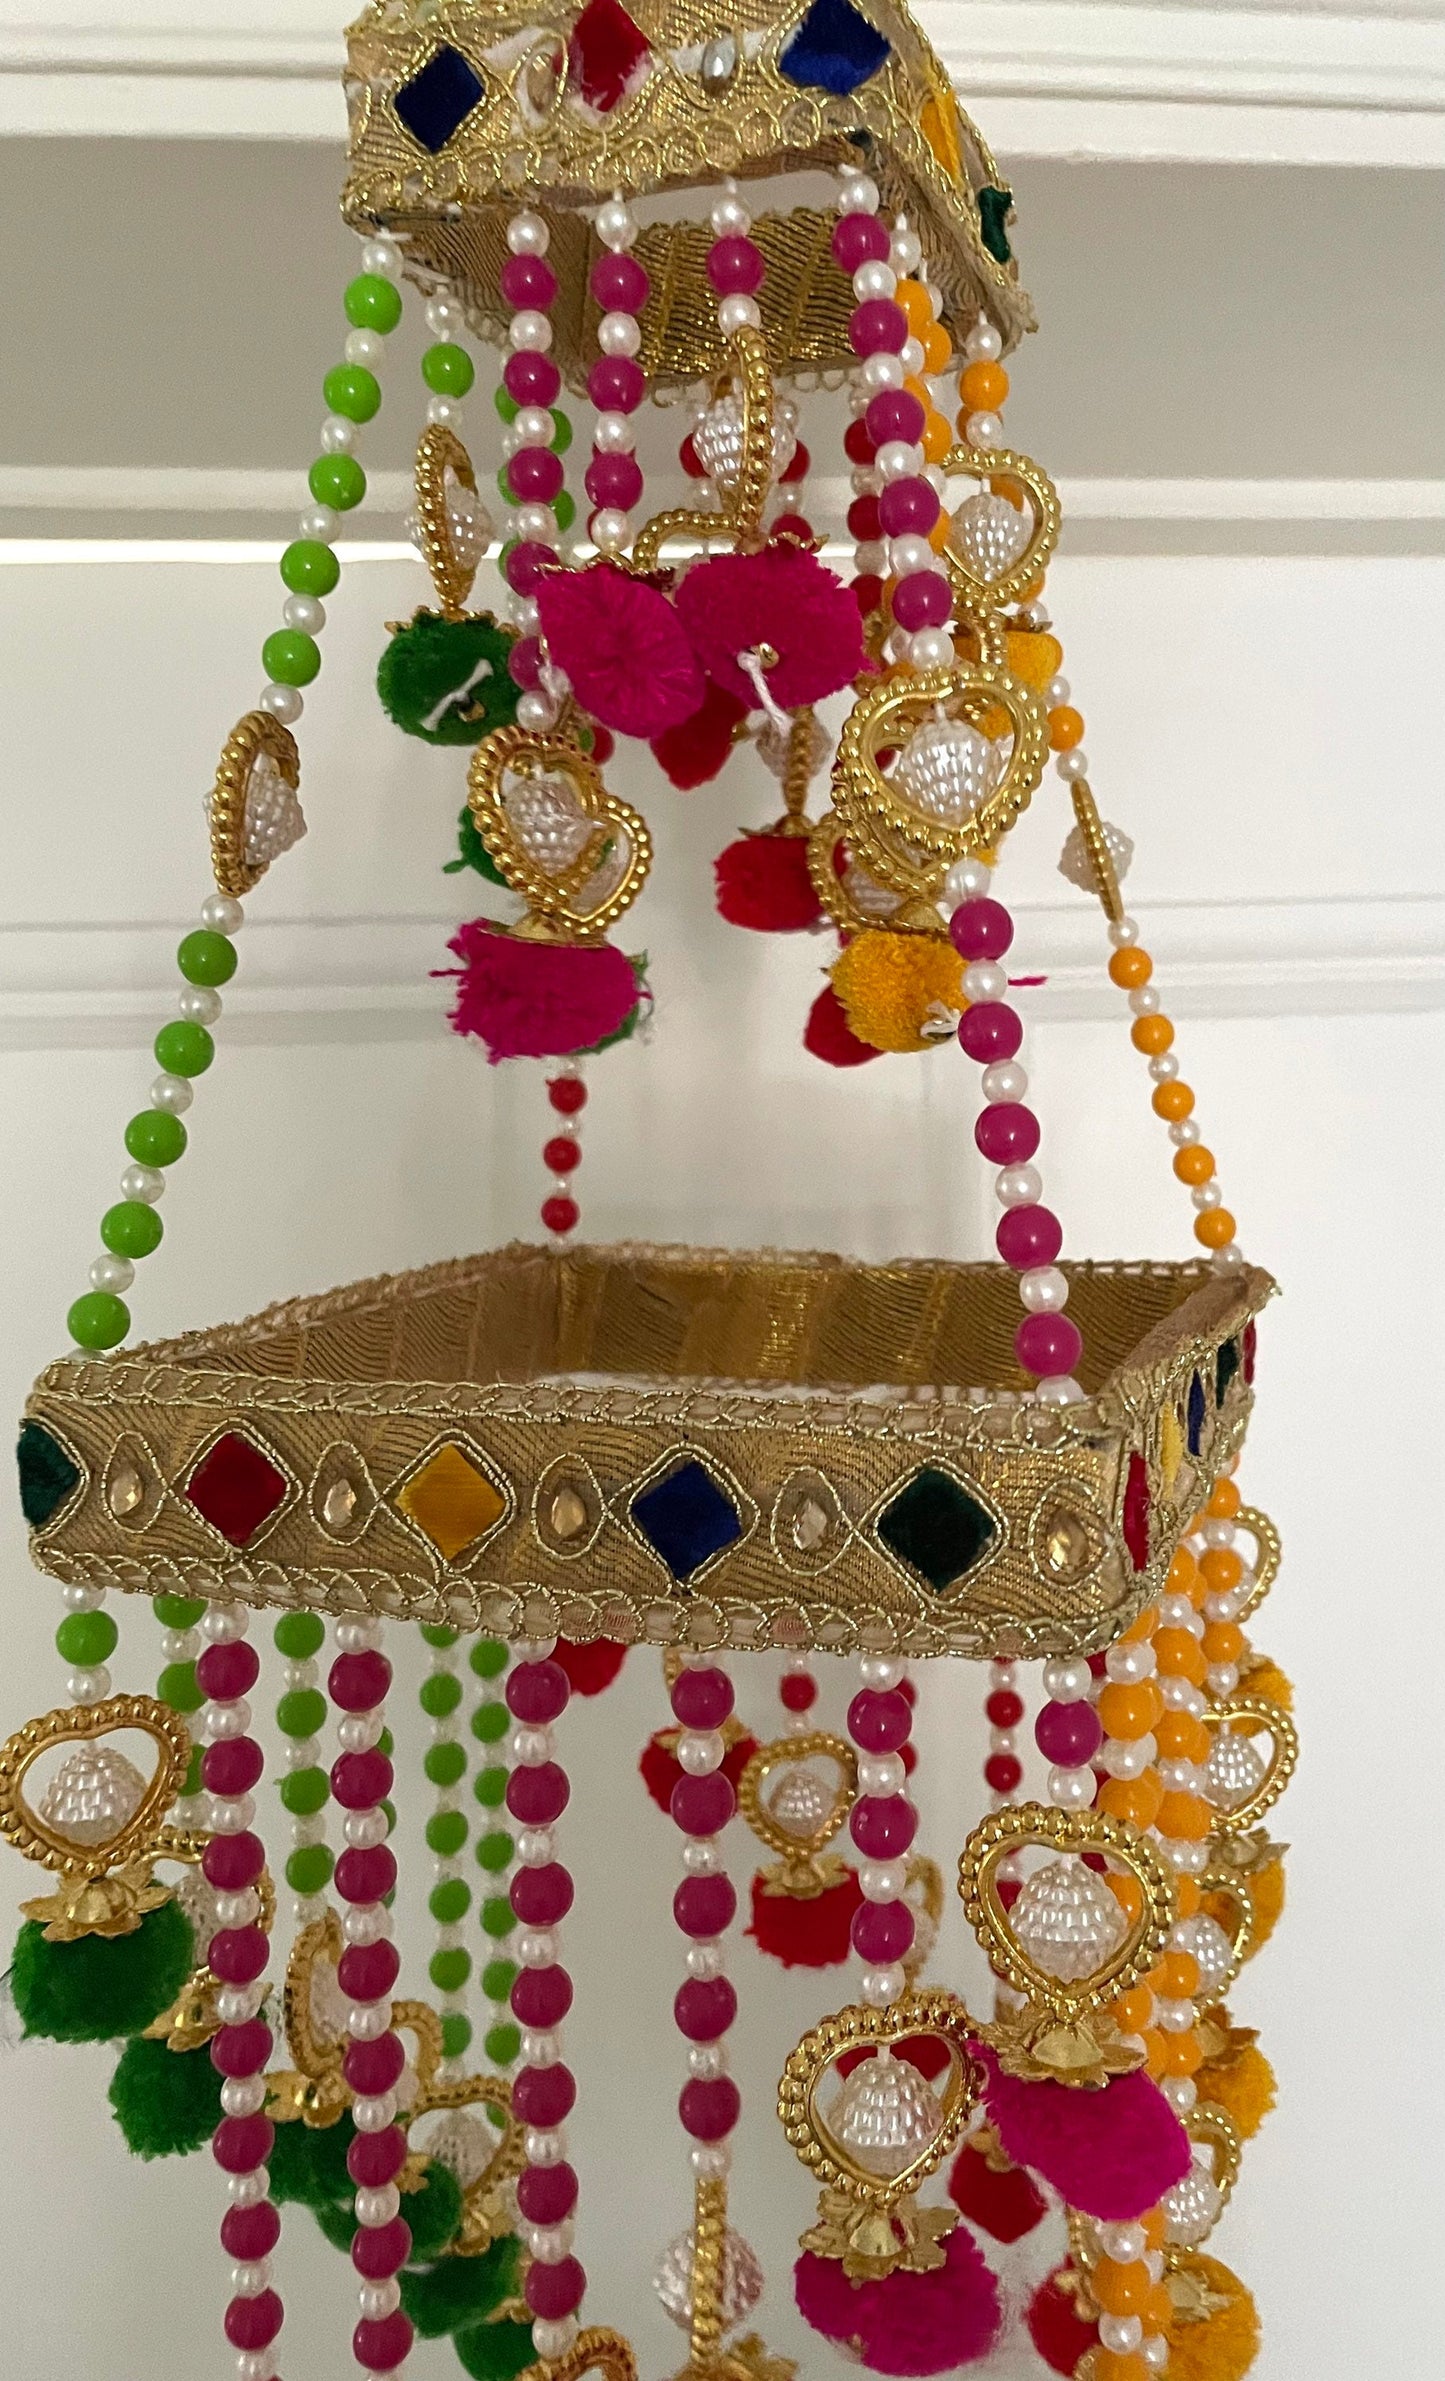 Home Decorations Pom Pom Jhoomar Door Hanging Pearls Beads Jhumka Style Latkan Diwalidecor Homedecor